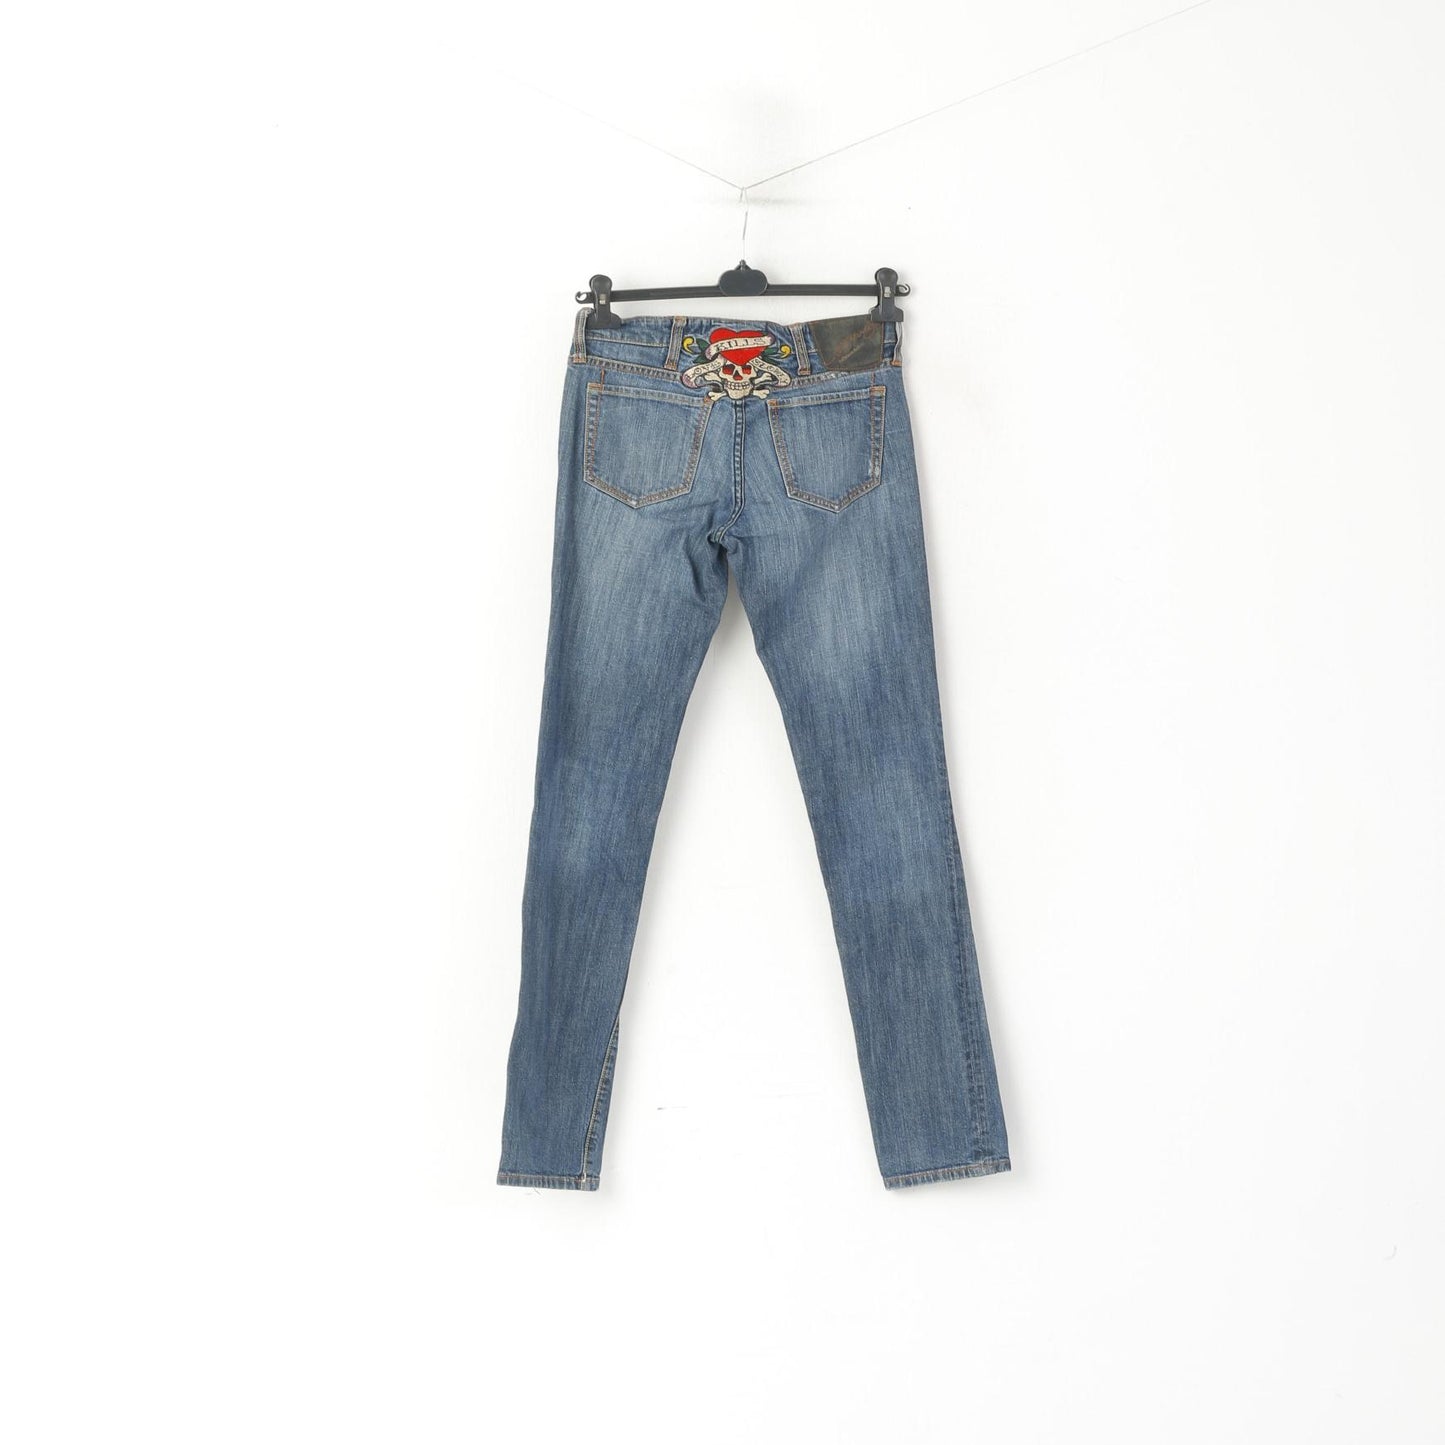 Ed Hardy by Christian Audigier Women 27 Jeans Trousers Blue Cotton Skinny Pants